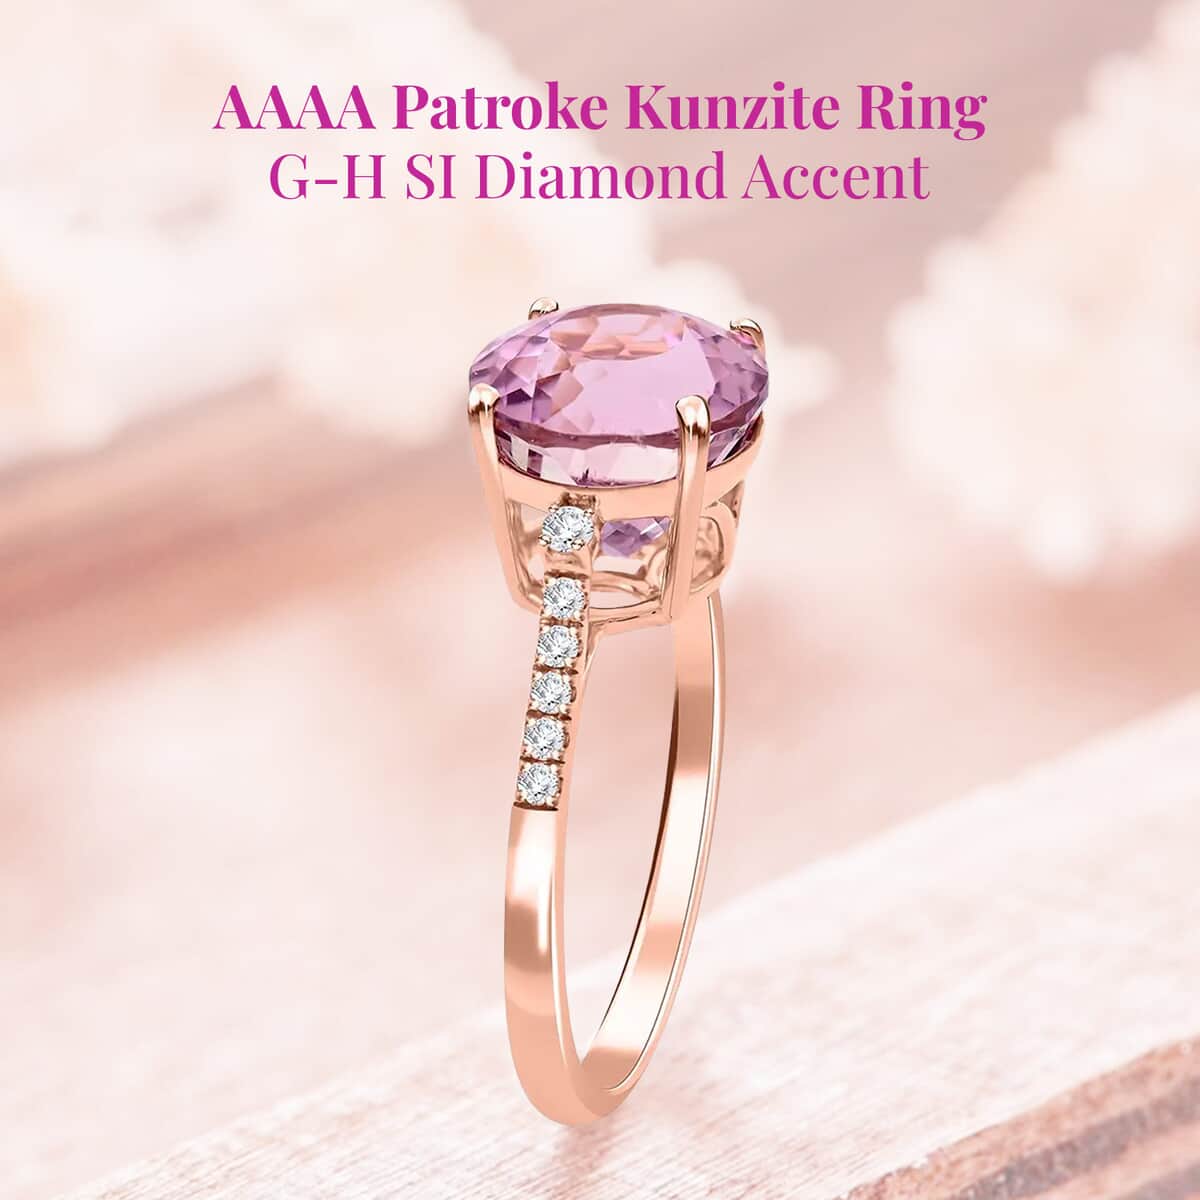 Iliana 18K Rose Gold AAAA Patroke Kunzite and G-H SI Diamond Ring 3.85 ctw image number 2